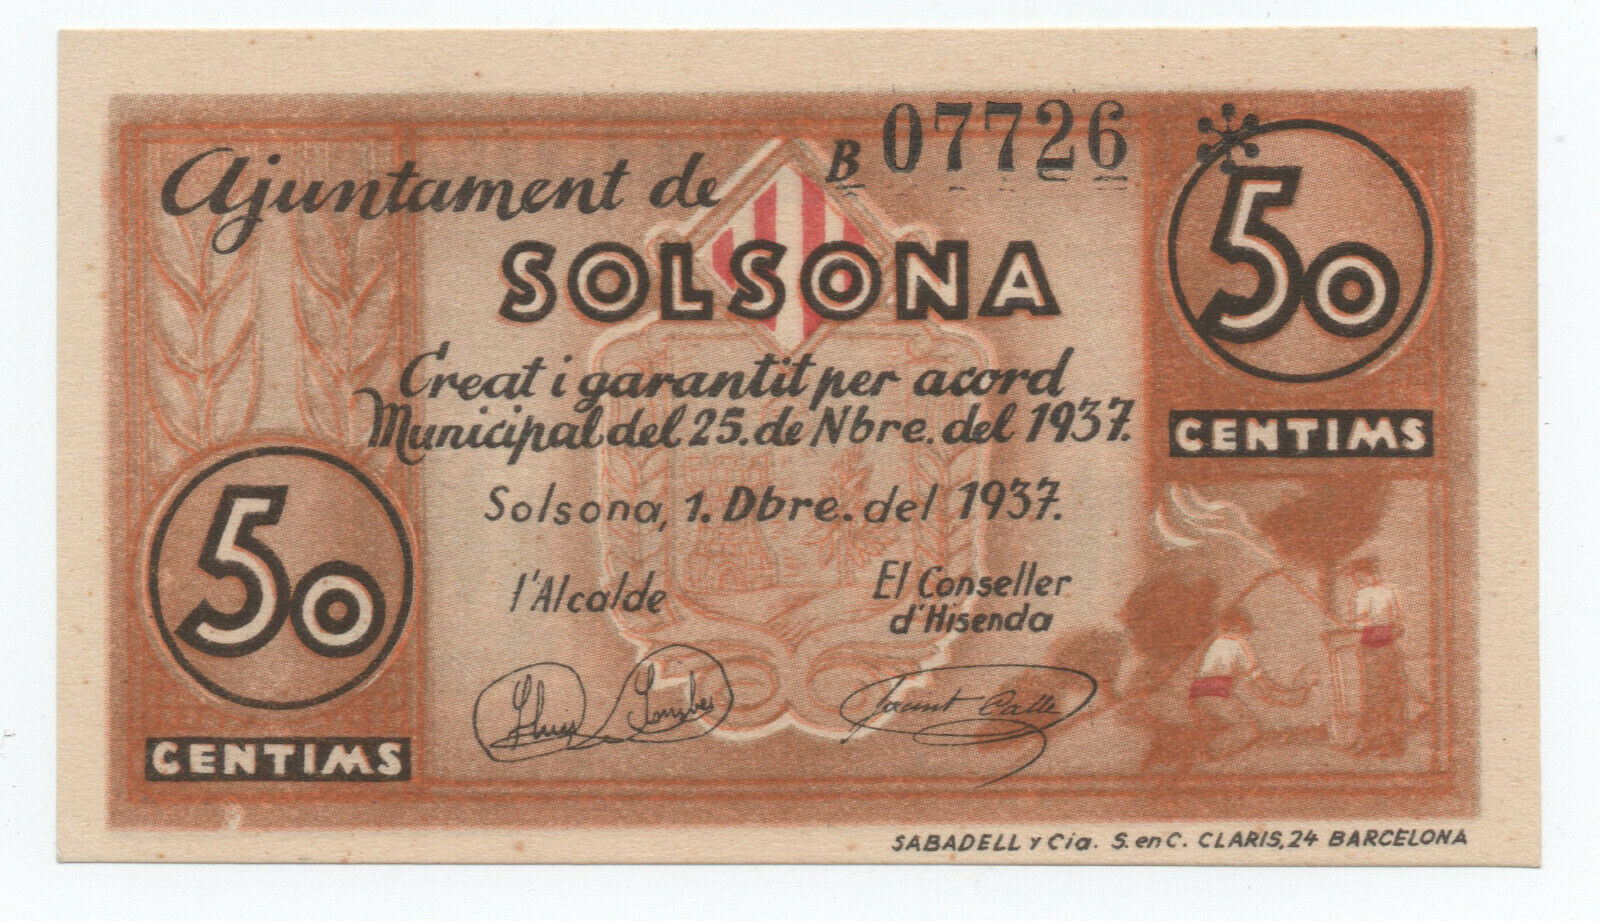 Solsona-1937-50-centimos-obv.jpg